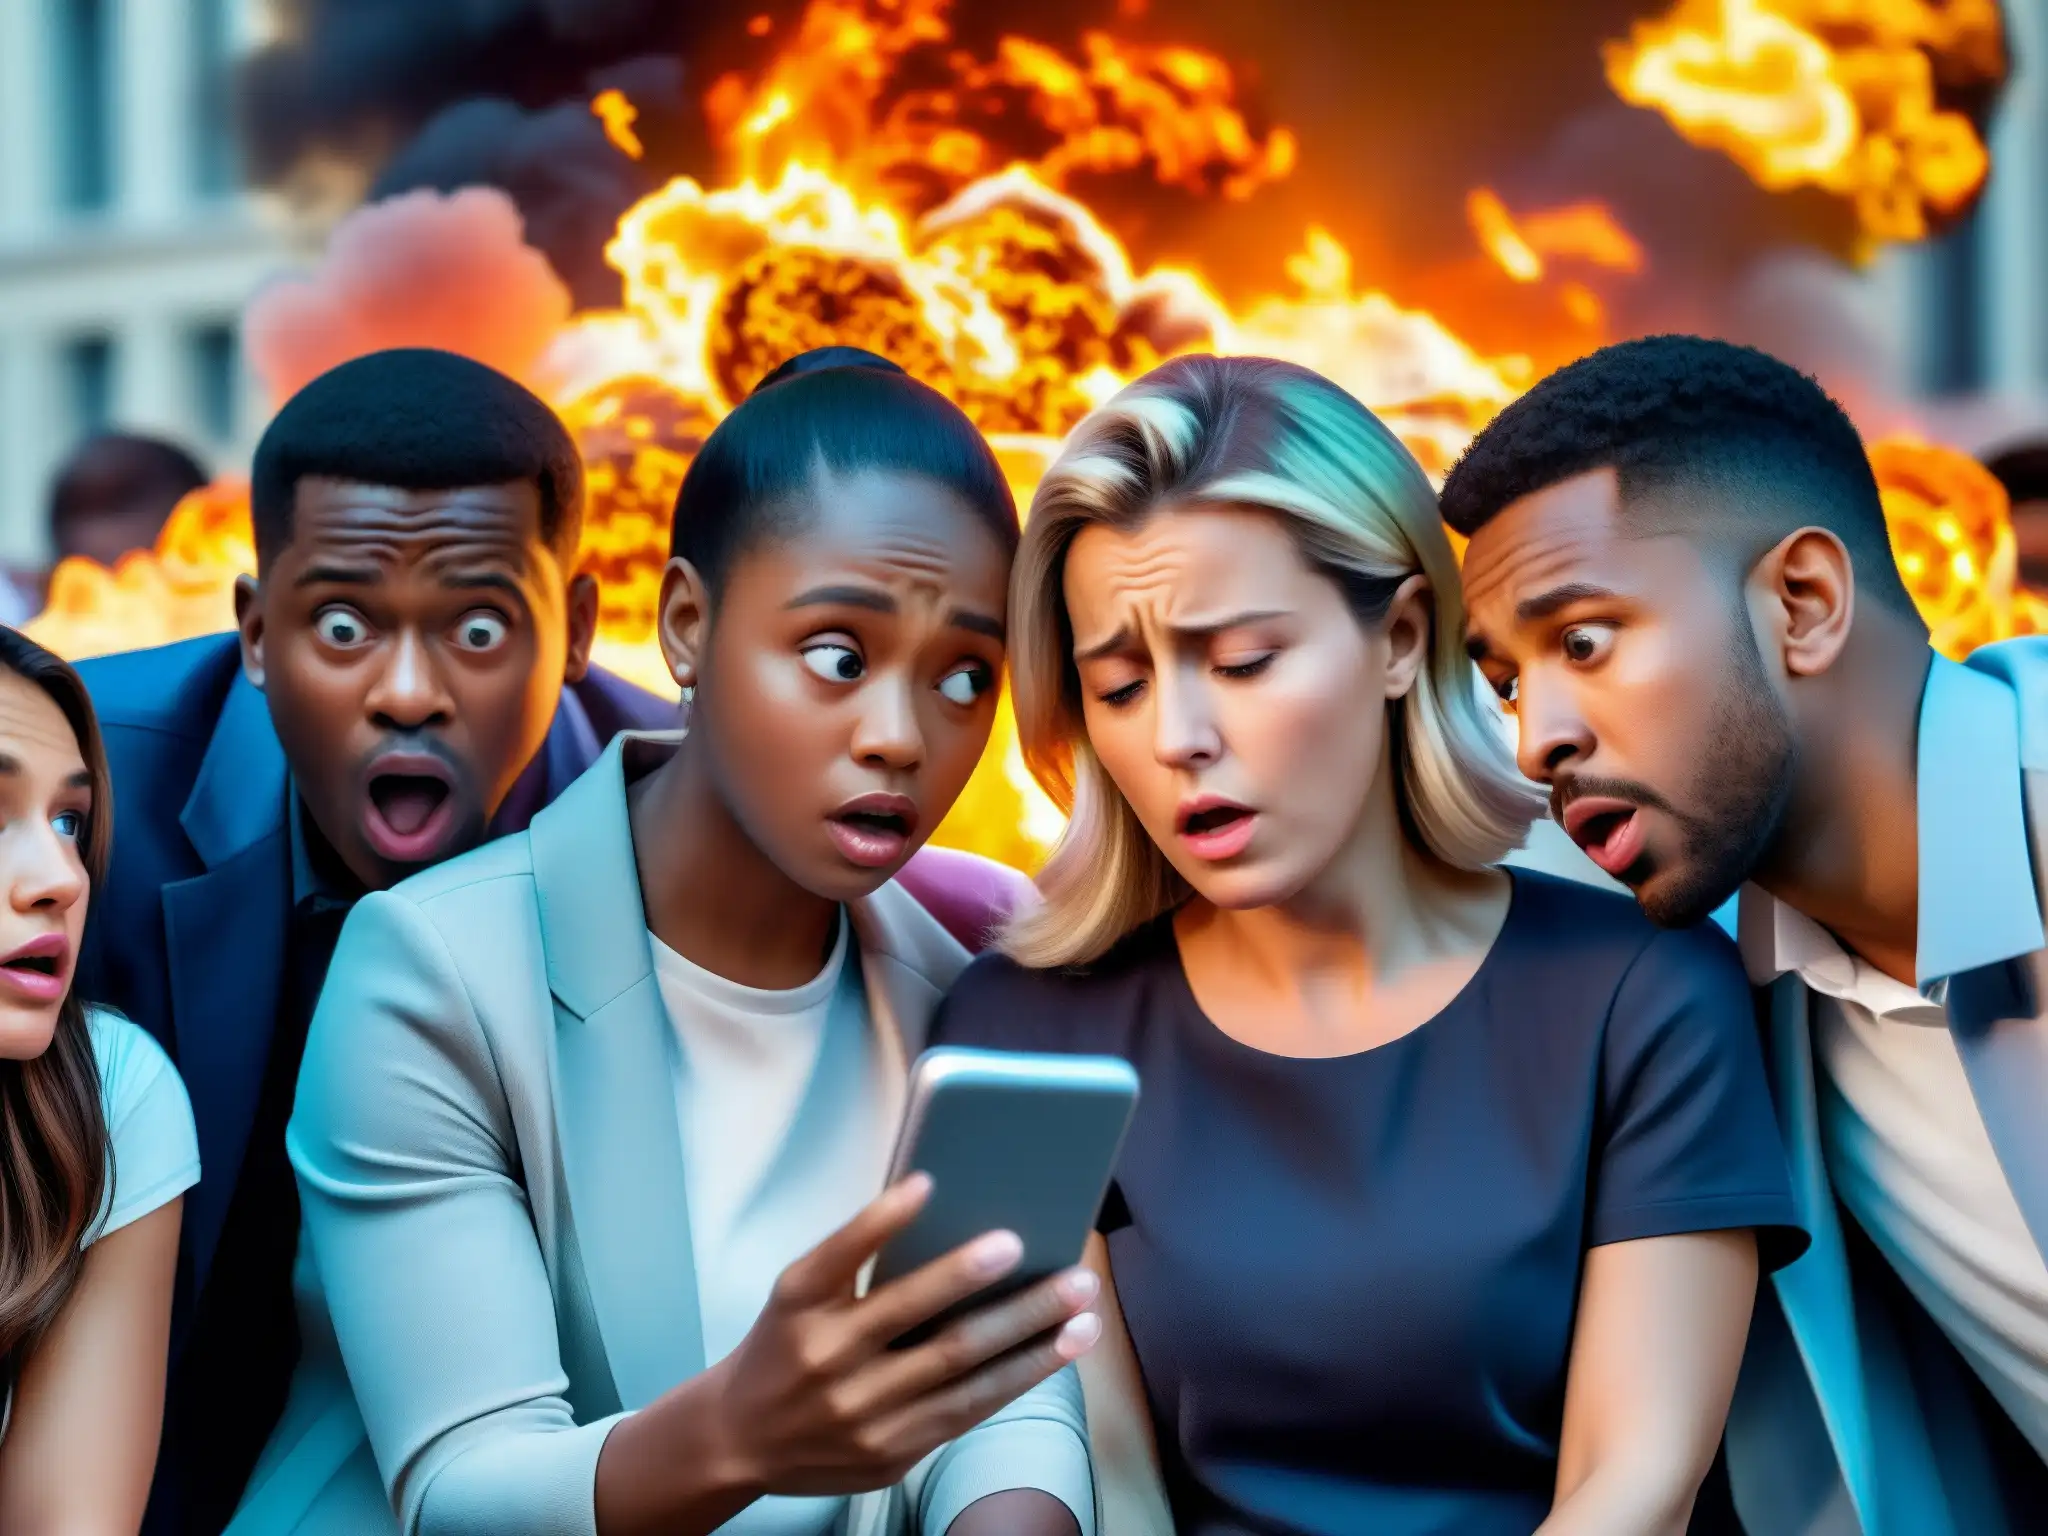 Un grupo de personas impactadas por las noticias falsas en un celular